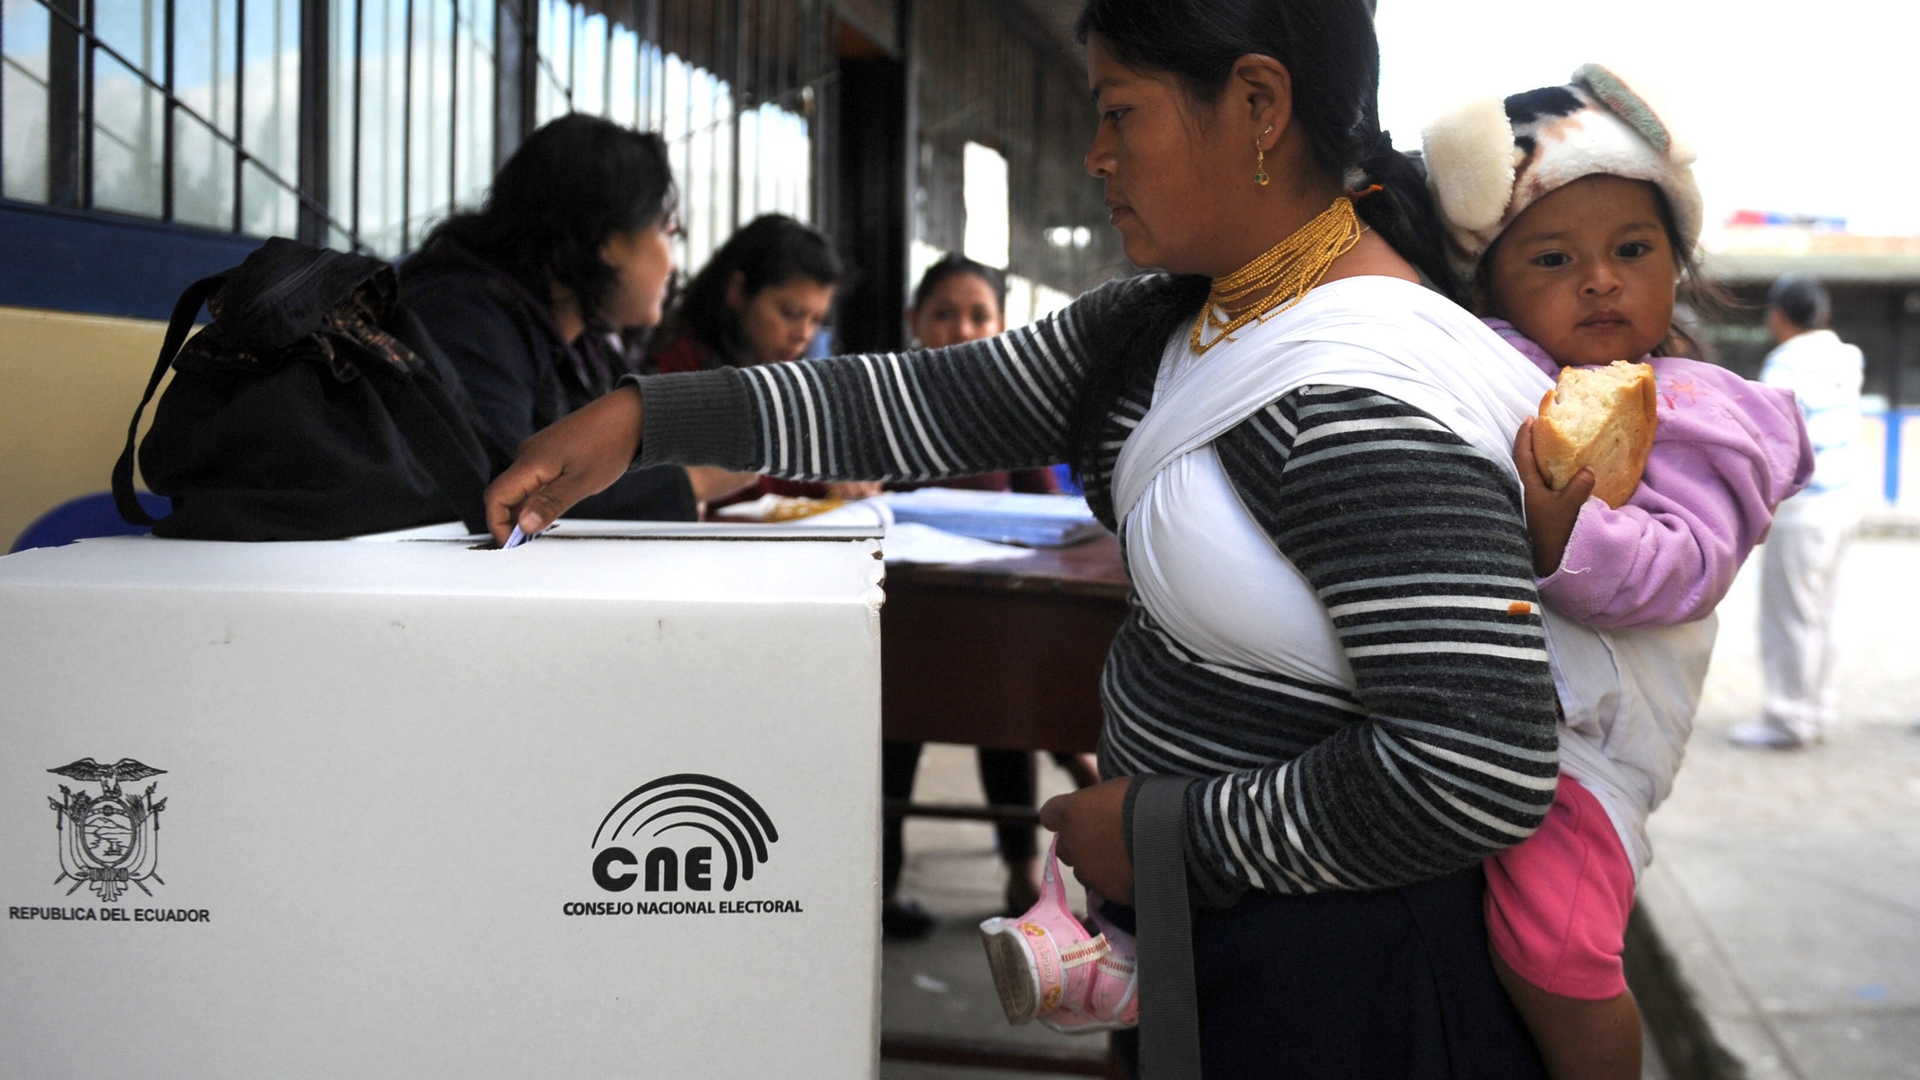 ANP-Ecuador_verkiezingen300.jpg